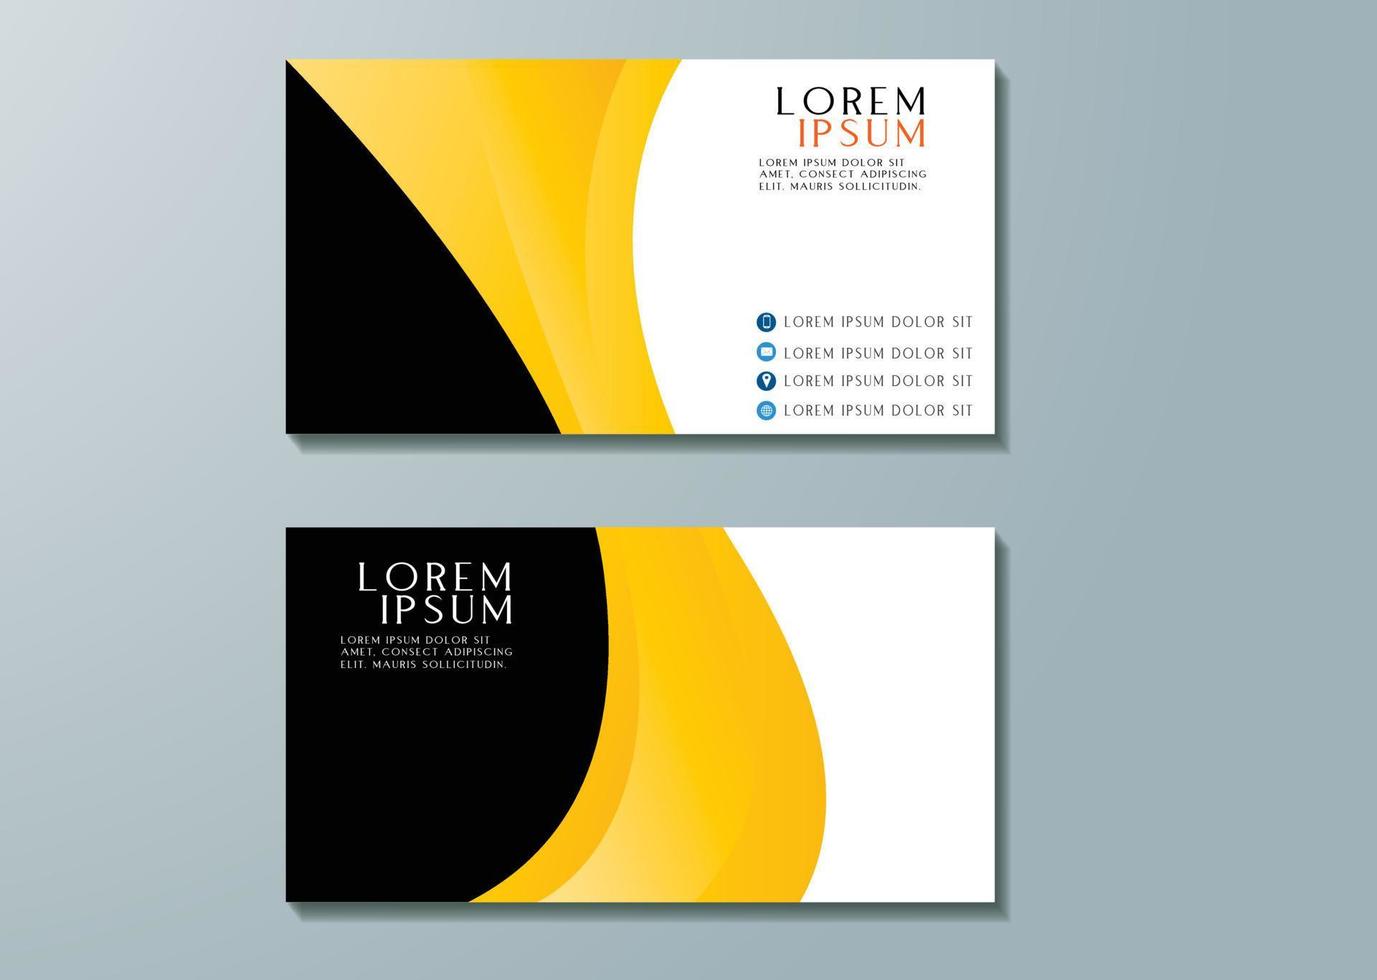 modern creative business card template vector